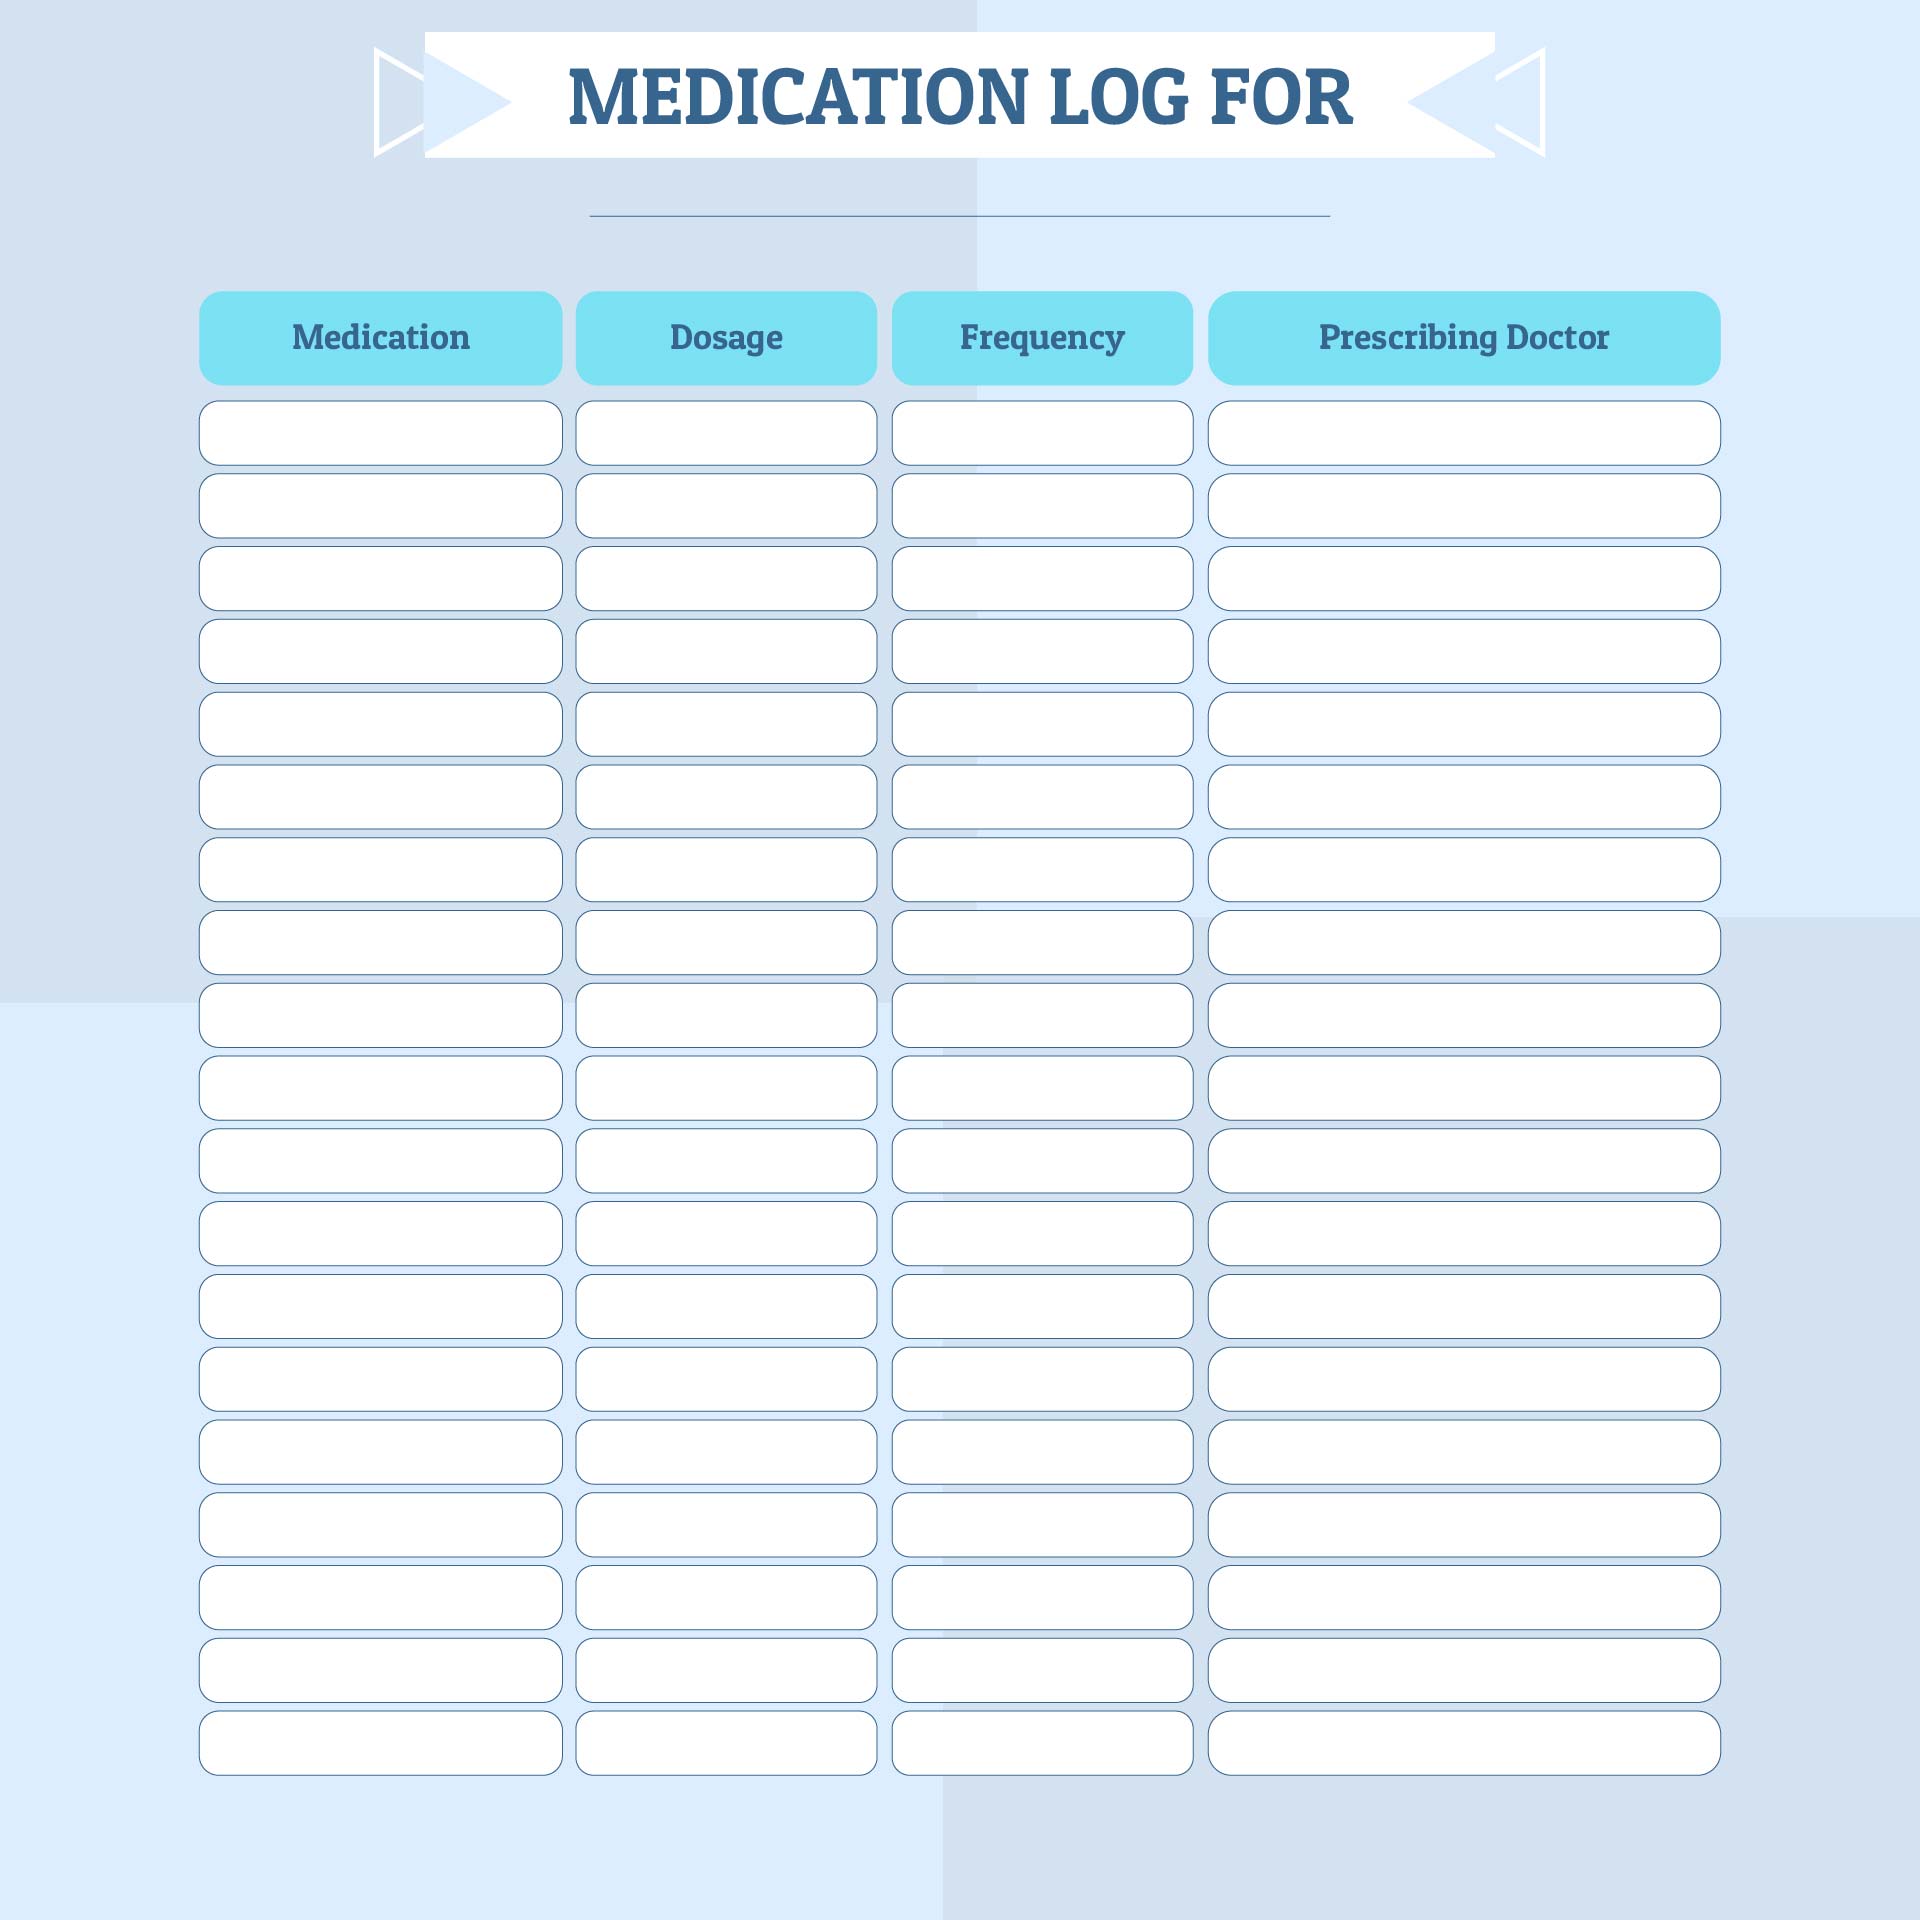 Printable Medication Log Form